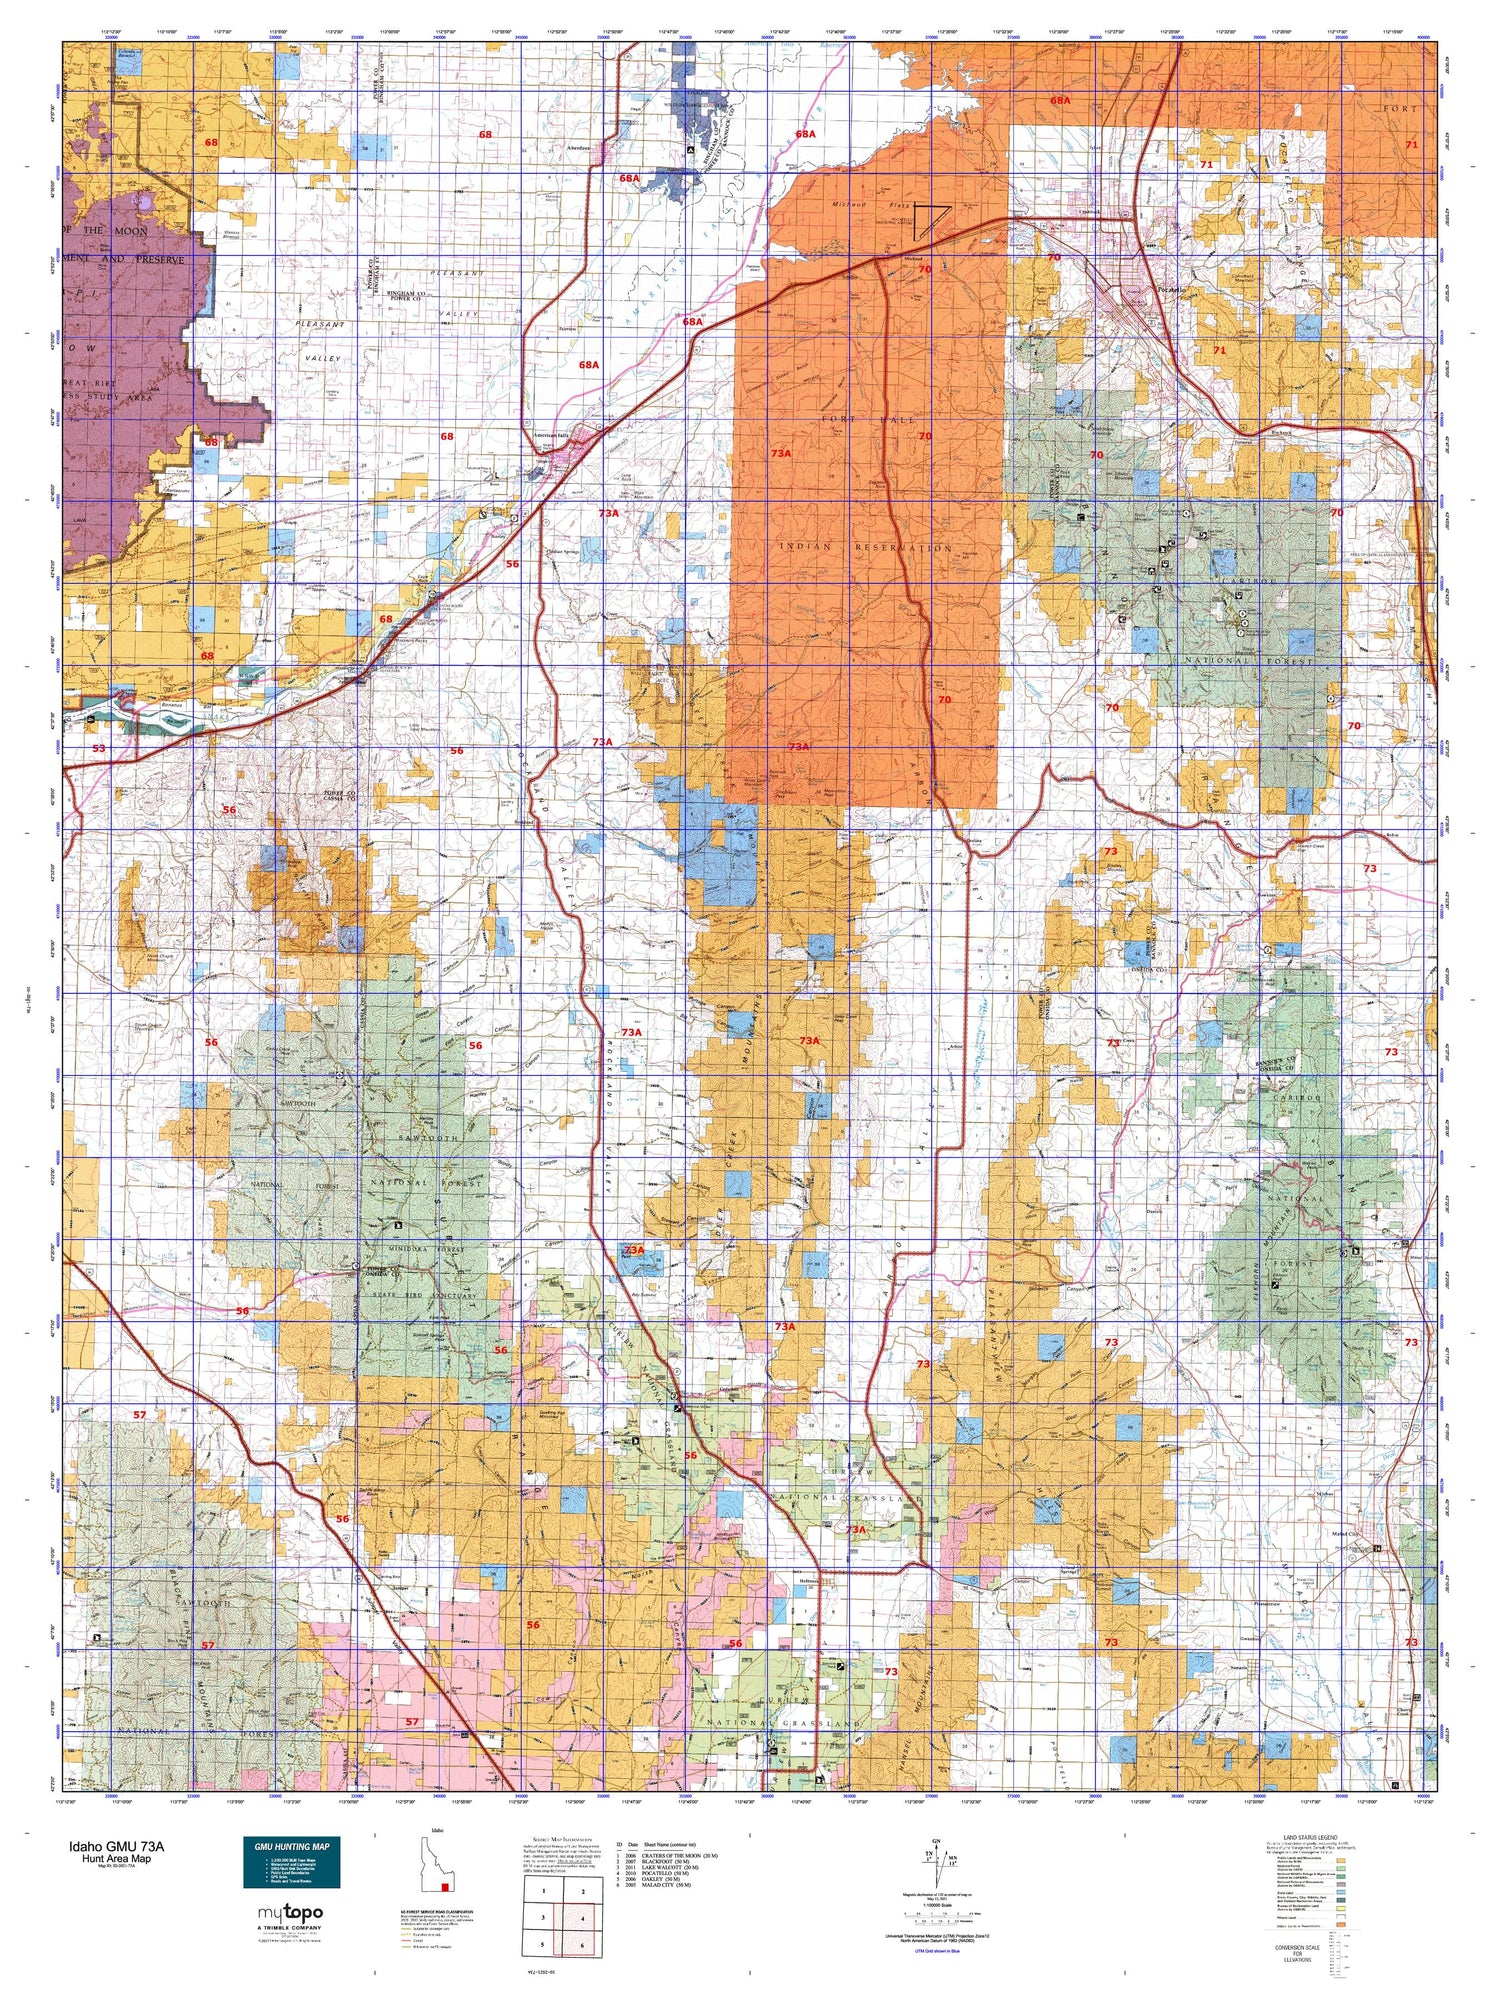 Idaho GMU 73A Map Image